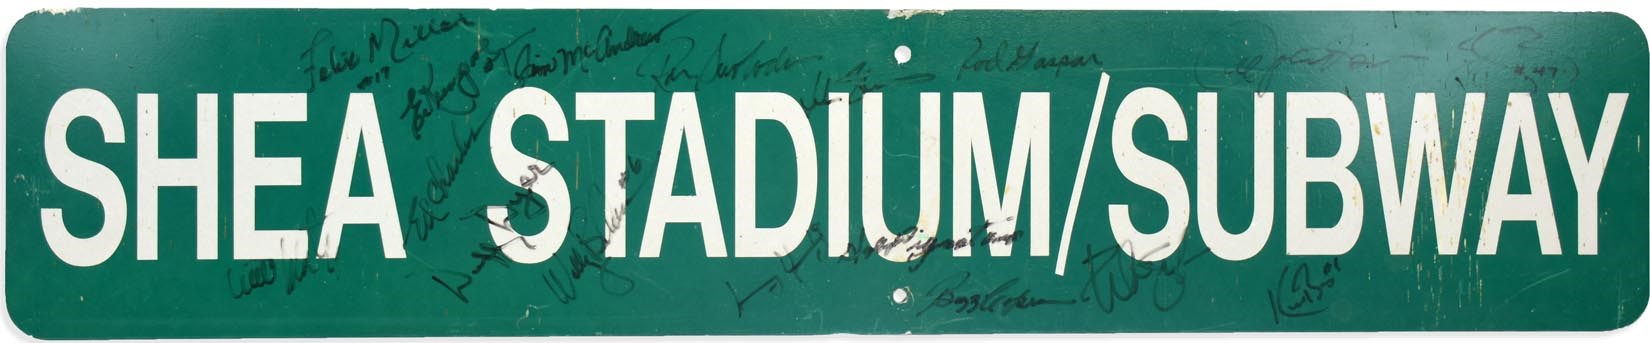 Baseball Autographs - Shea Stadium Subway Sign with 17 New York Mets Signatures